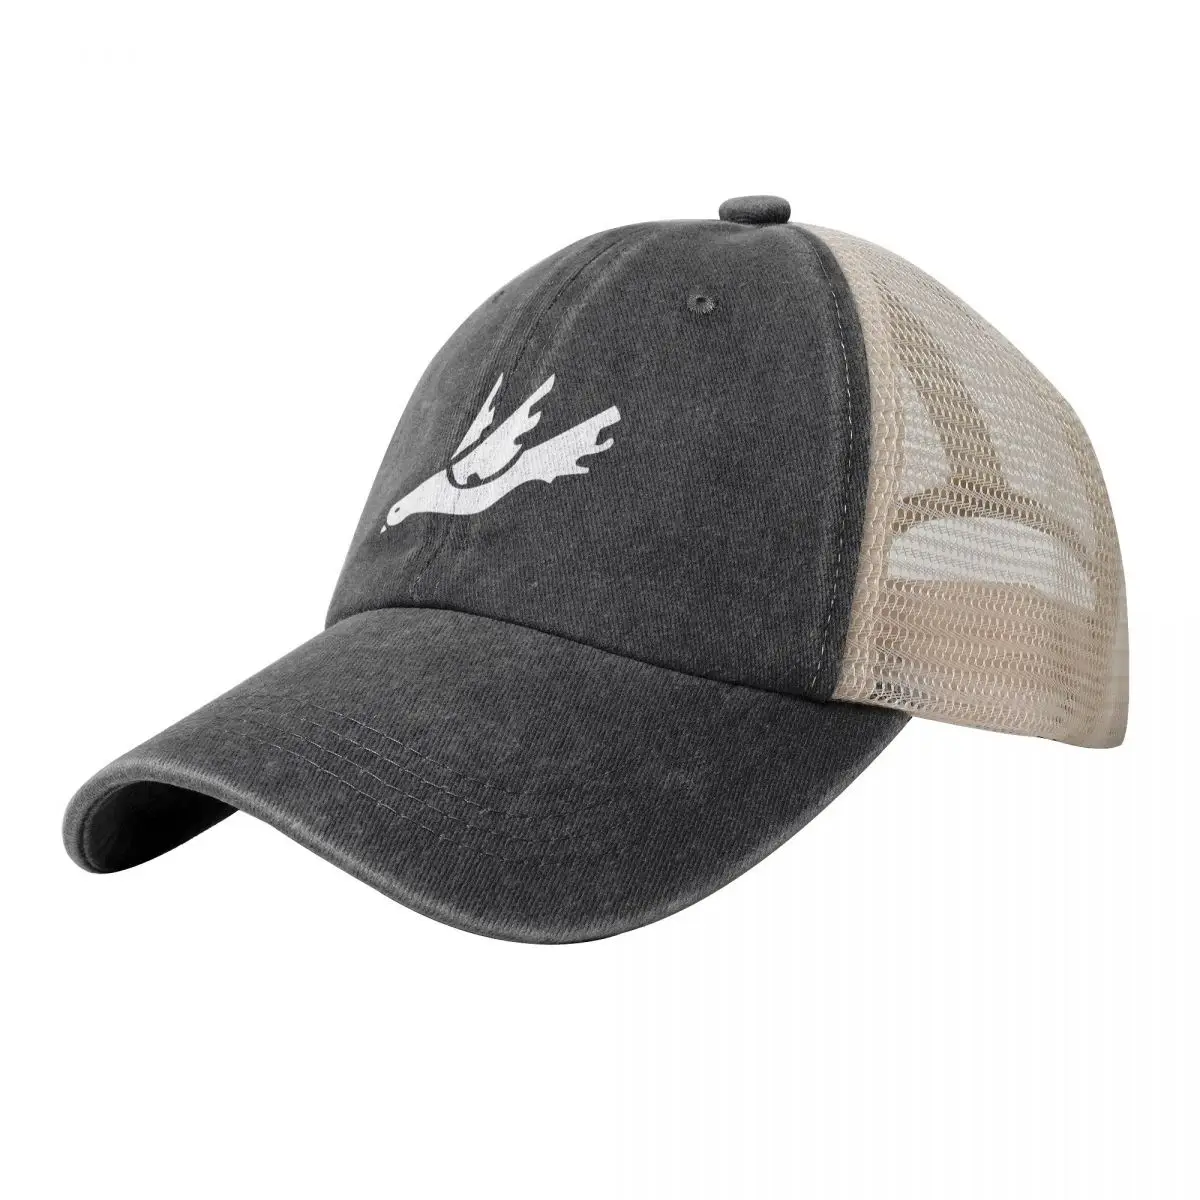 

Thursday White Dove Band Logo Cowboy Mesh Baseball Cap fashionable Rugby hiking hat Golf Hat Women's Men's